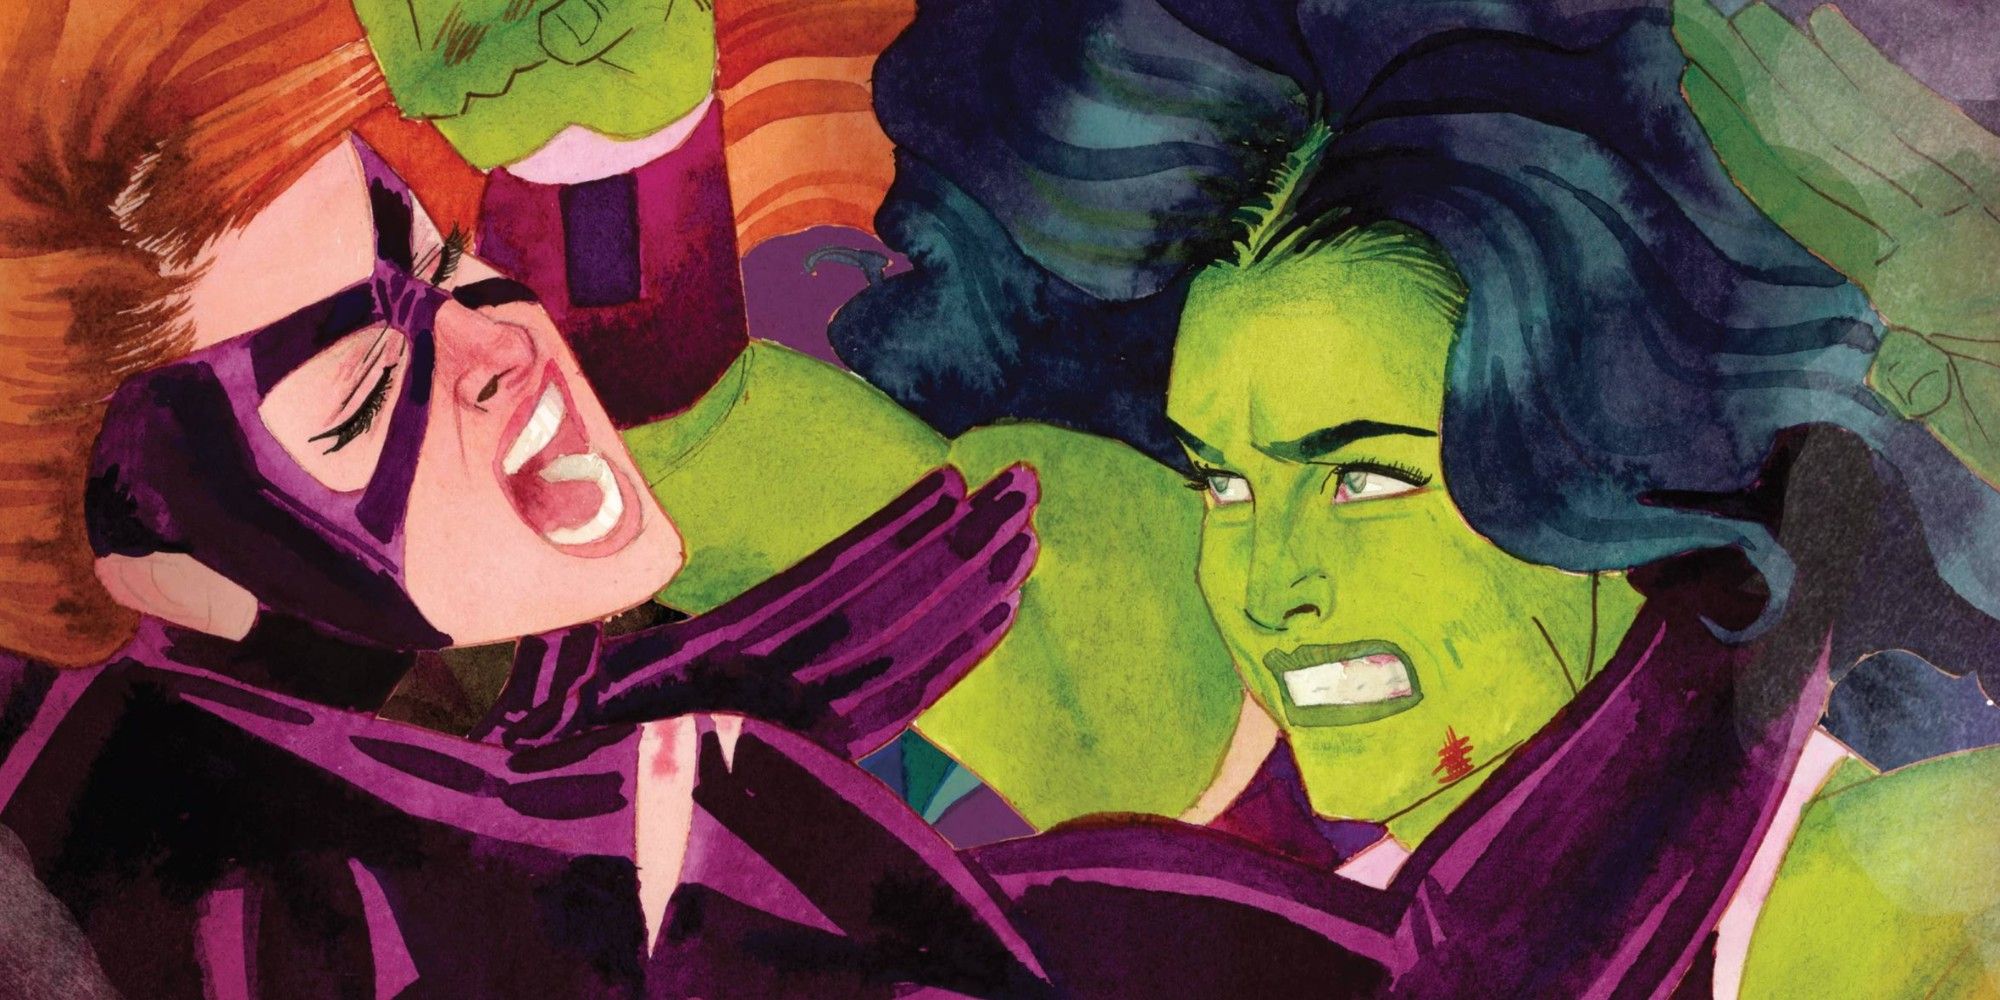 Titania fights She-Hulk in Marvel Comics.